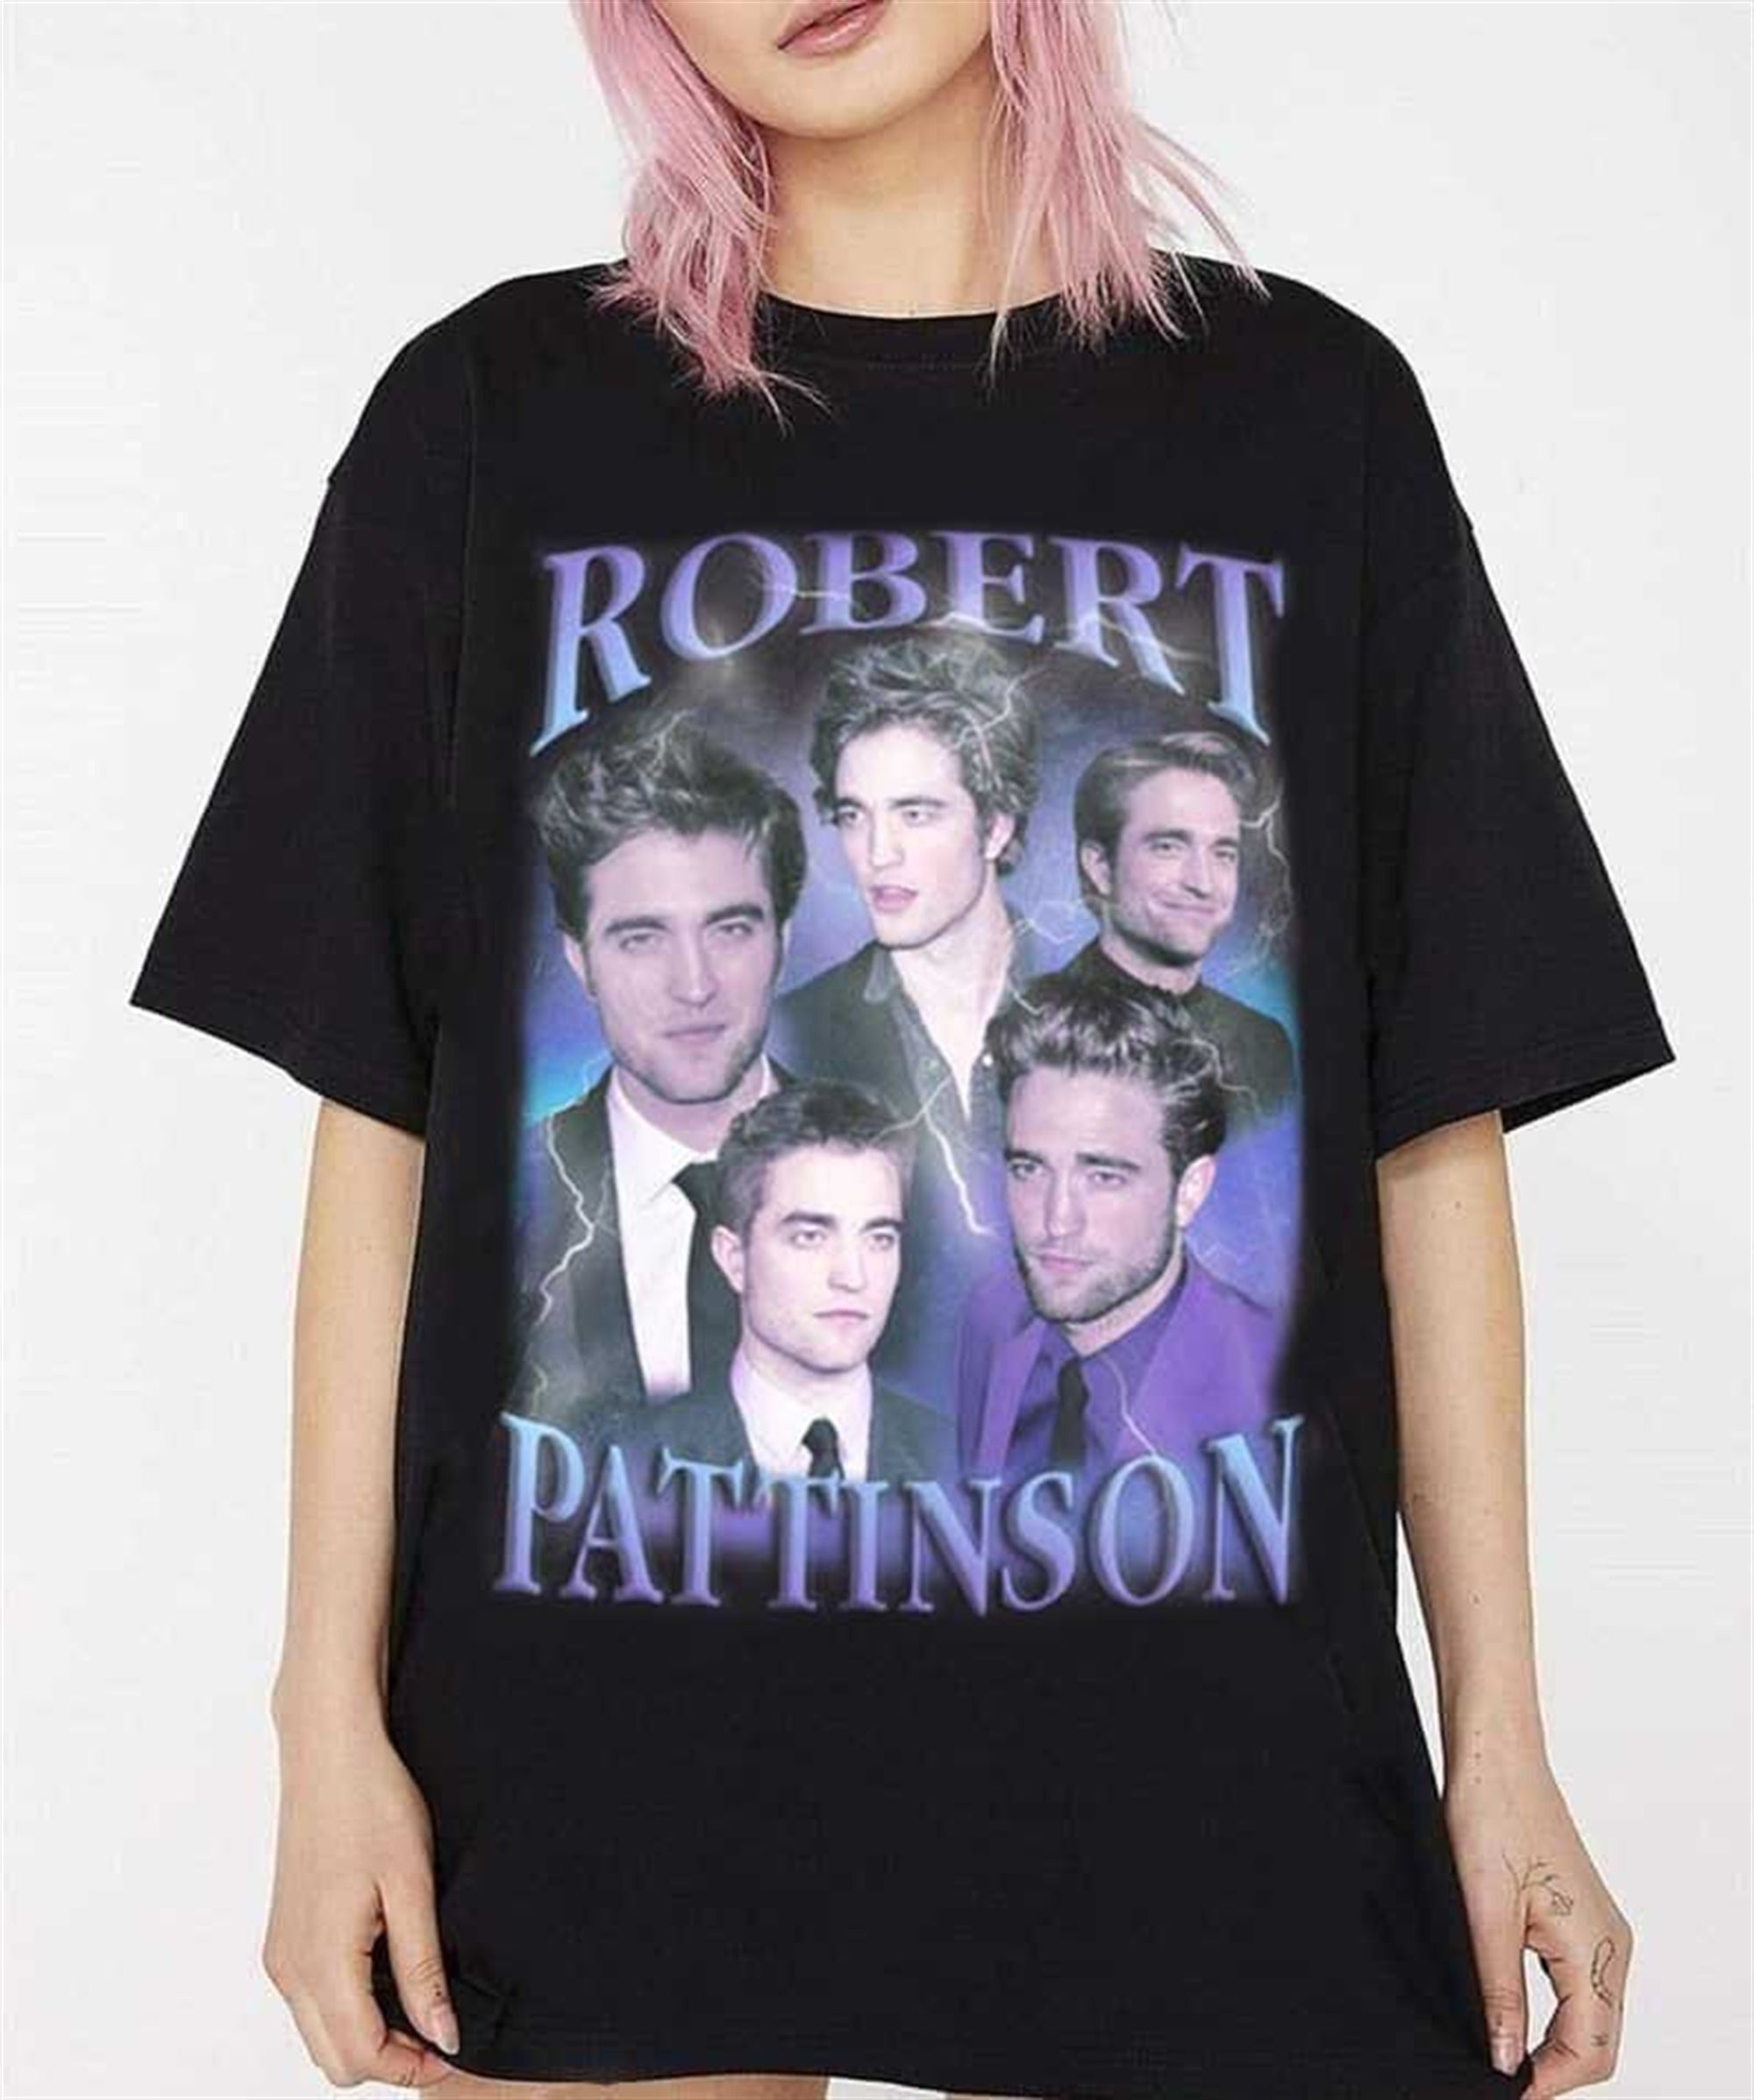 Awesome Edward Cullen Shirt Robert Pattinson Shirt Twitlight Movie Shirt Robert Pattinson T-shirt Team Jacob Shirt Team Edward Shirt Ha 